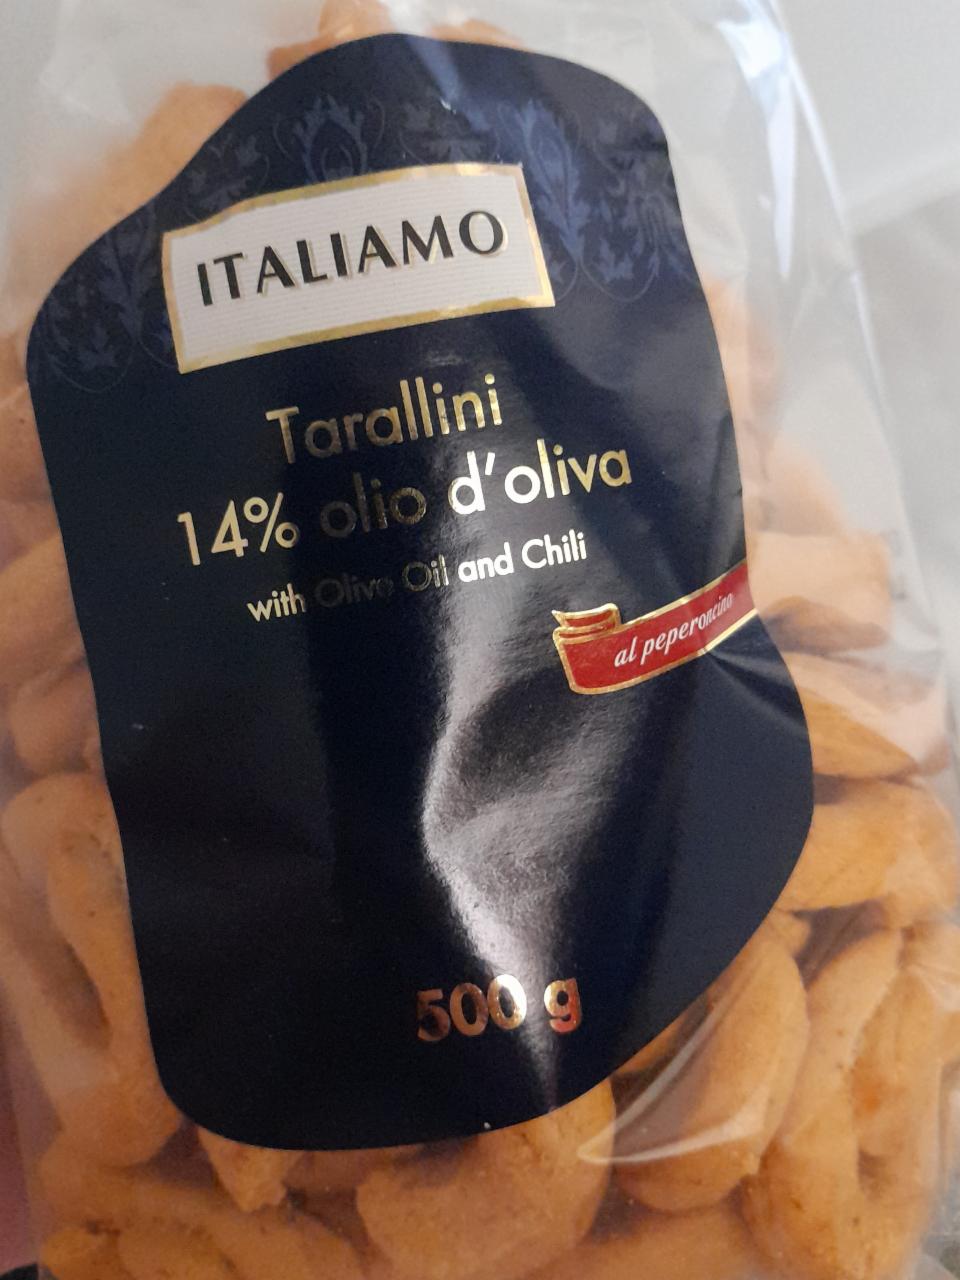 Fotografie - Tarallini 14% olio d'oliva with Olive Oil and Chili Italiamo